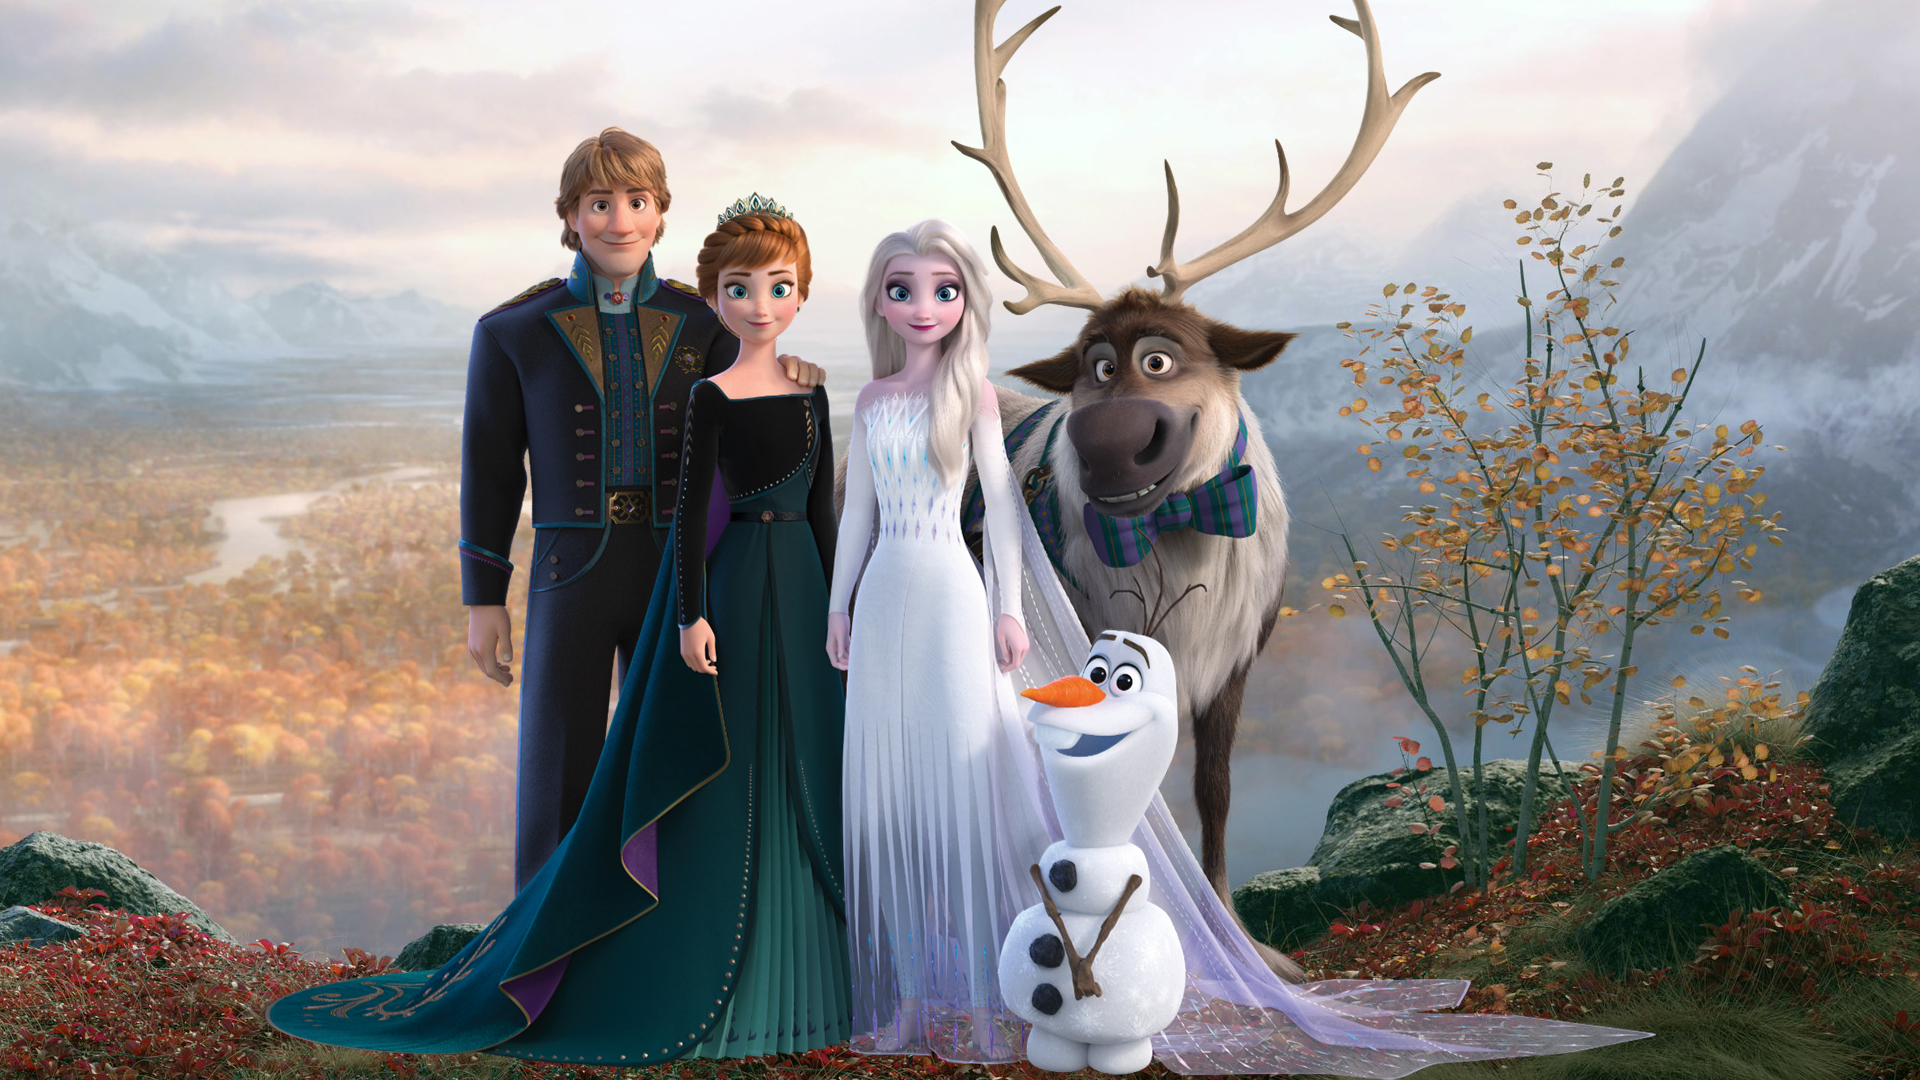 Elsa White Background